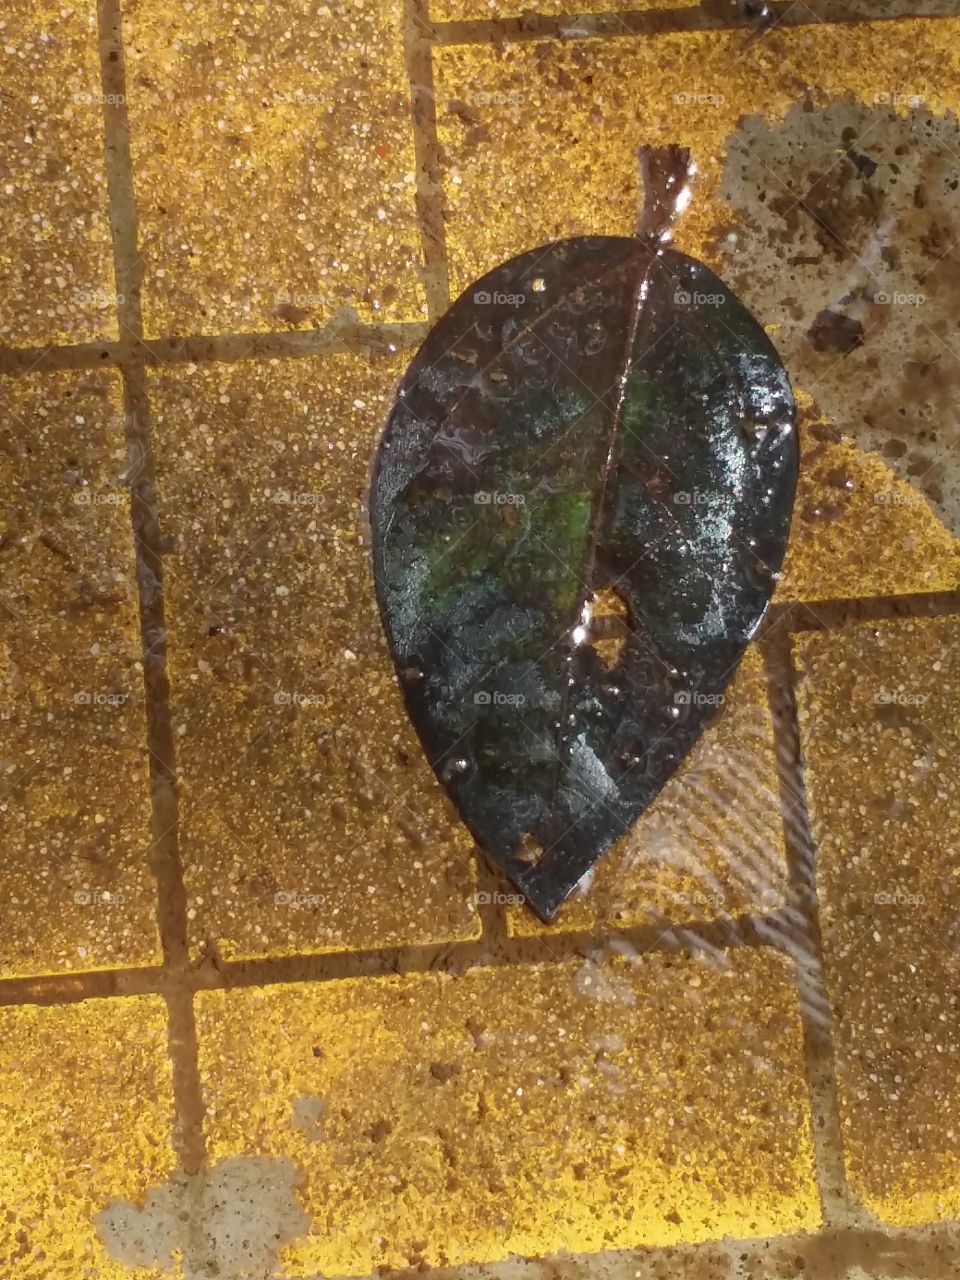 Story of leaves life ( leaf )